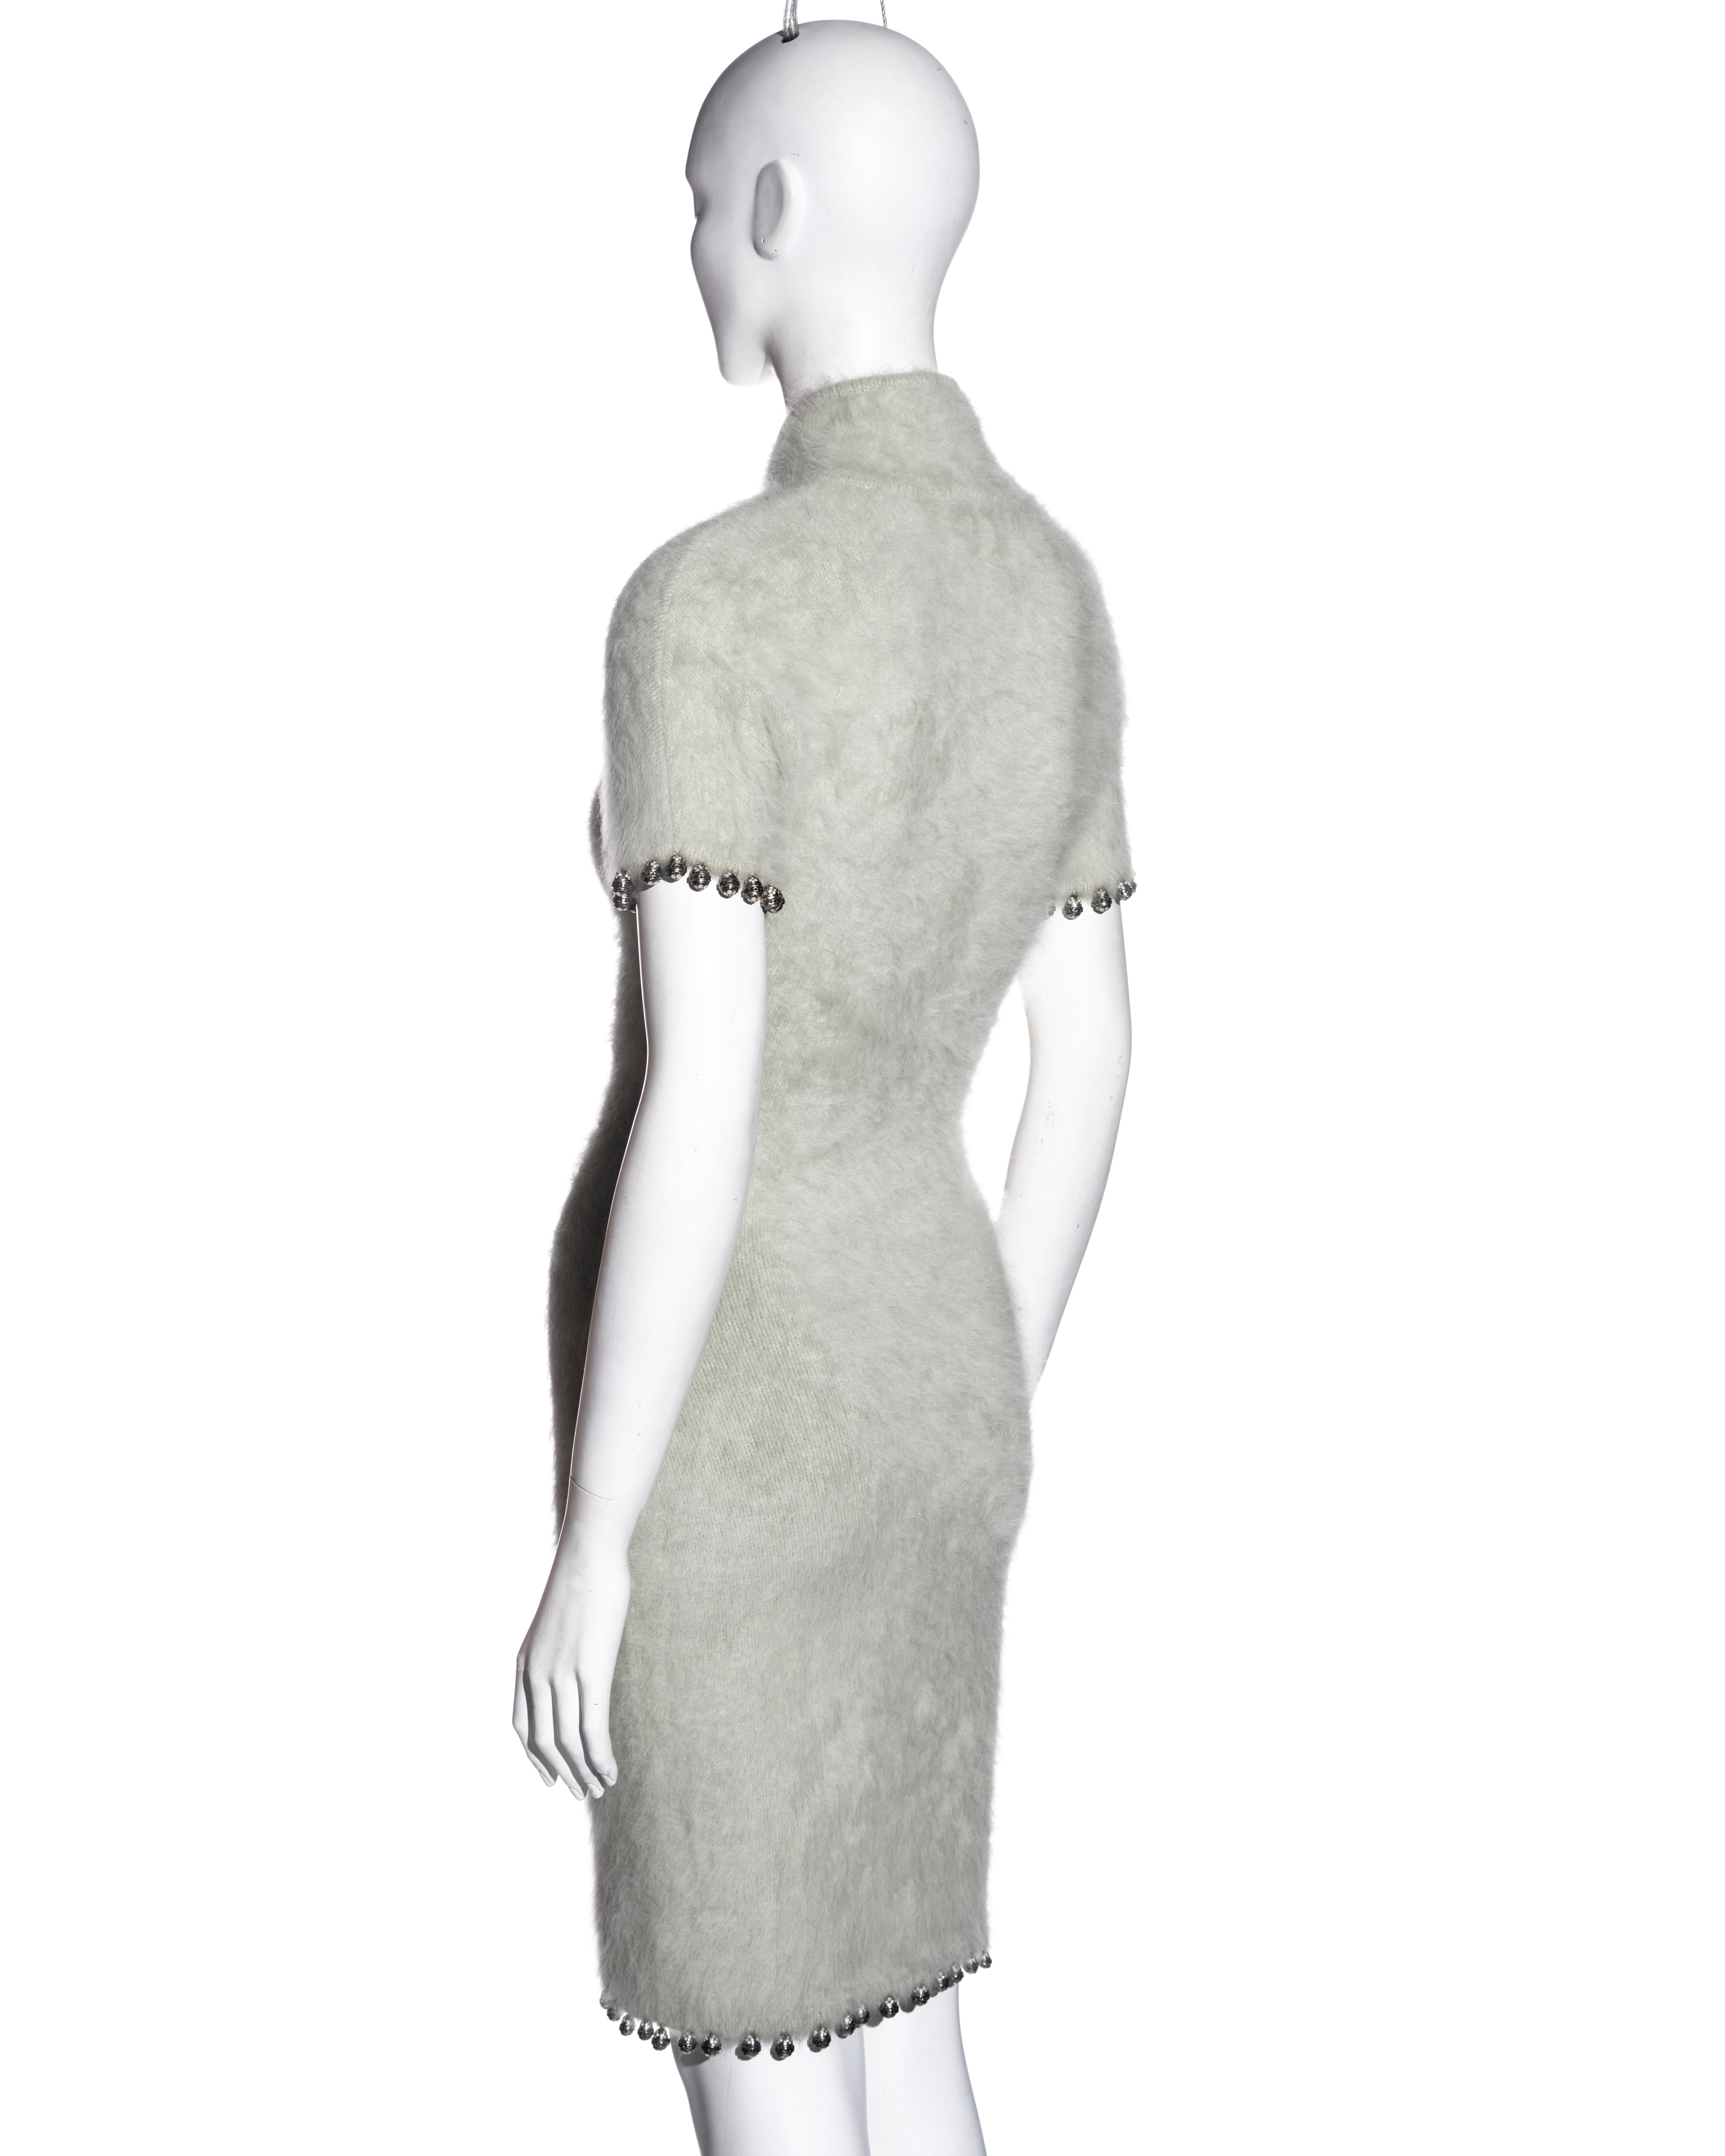 Christian Dior by John Galliano Angora cheongsam-style dress, fw 1997 2